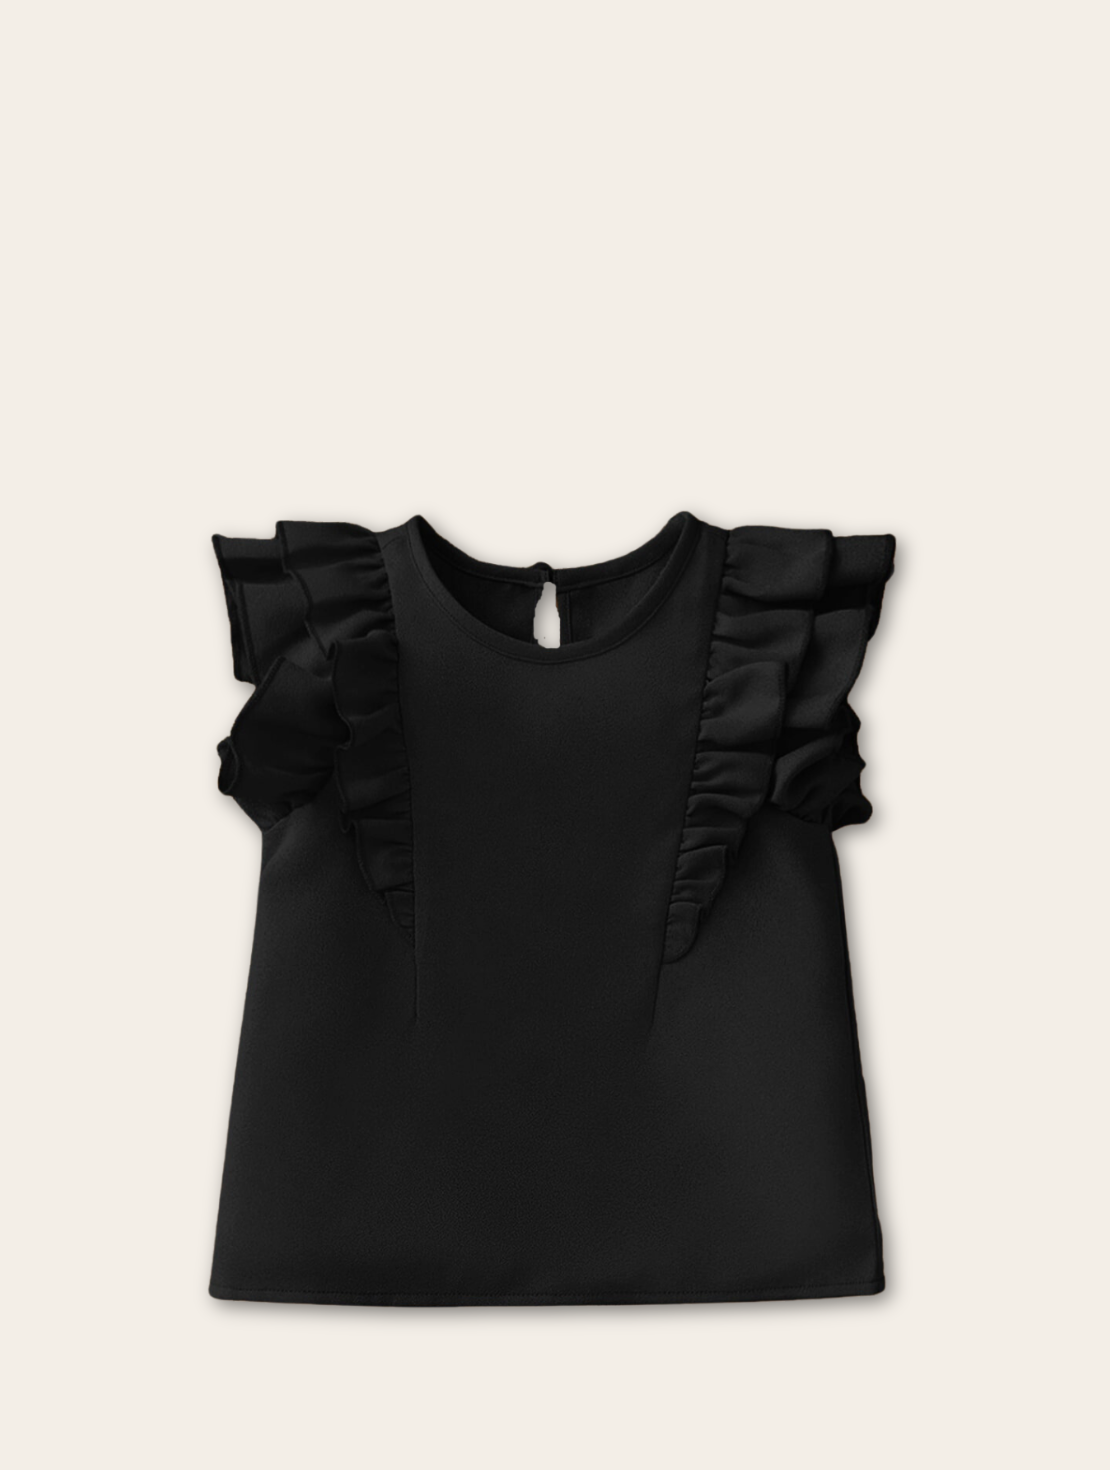 Shirt - Black ruffle